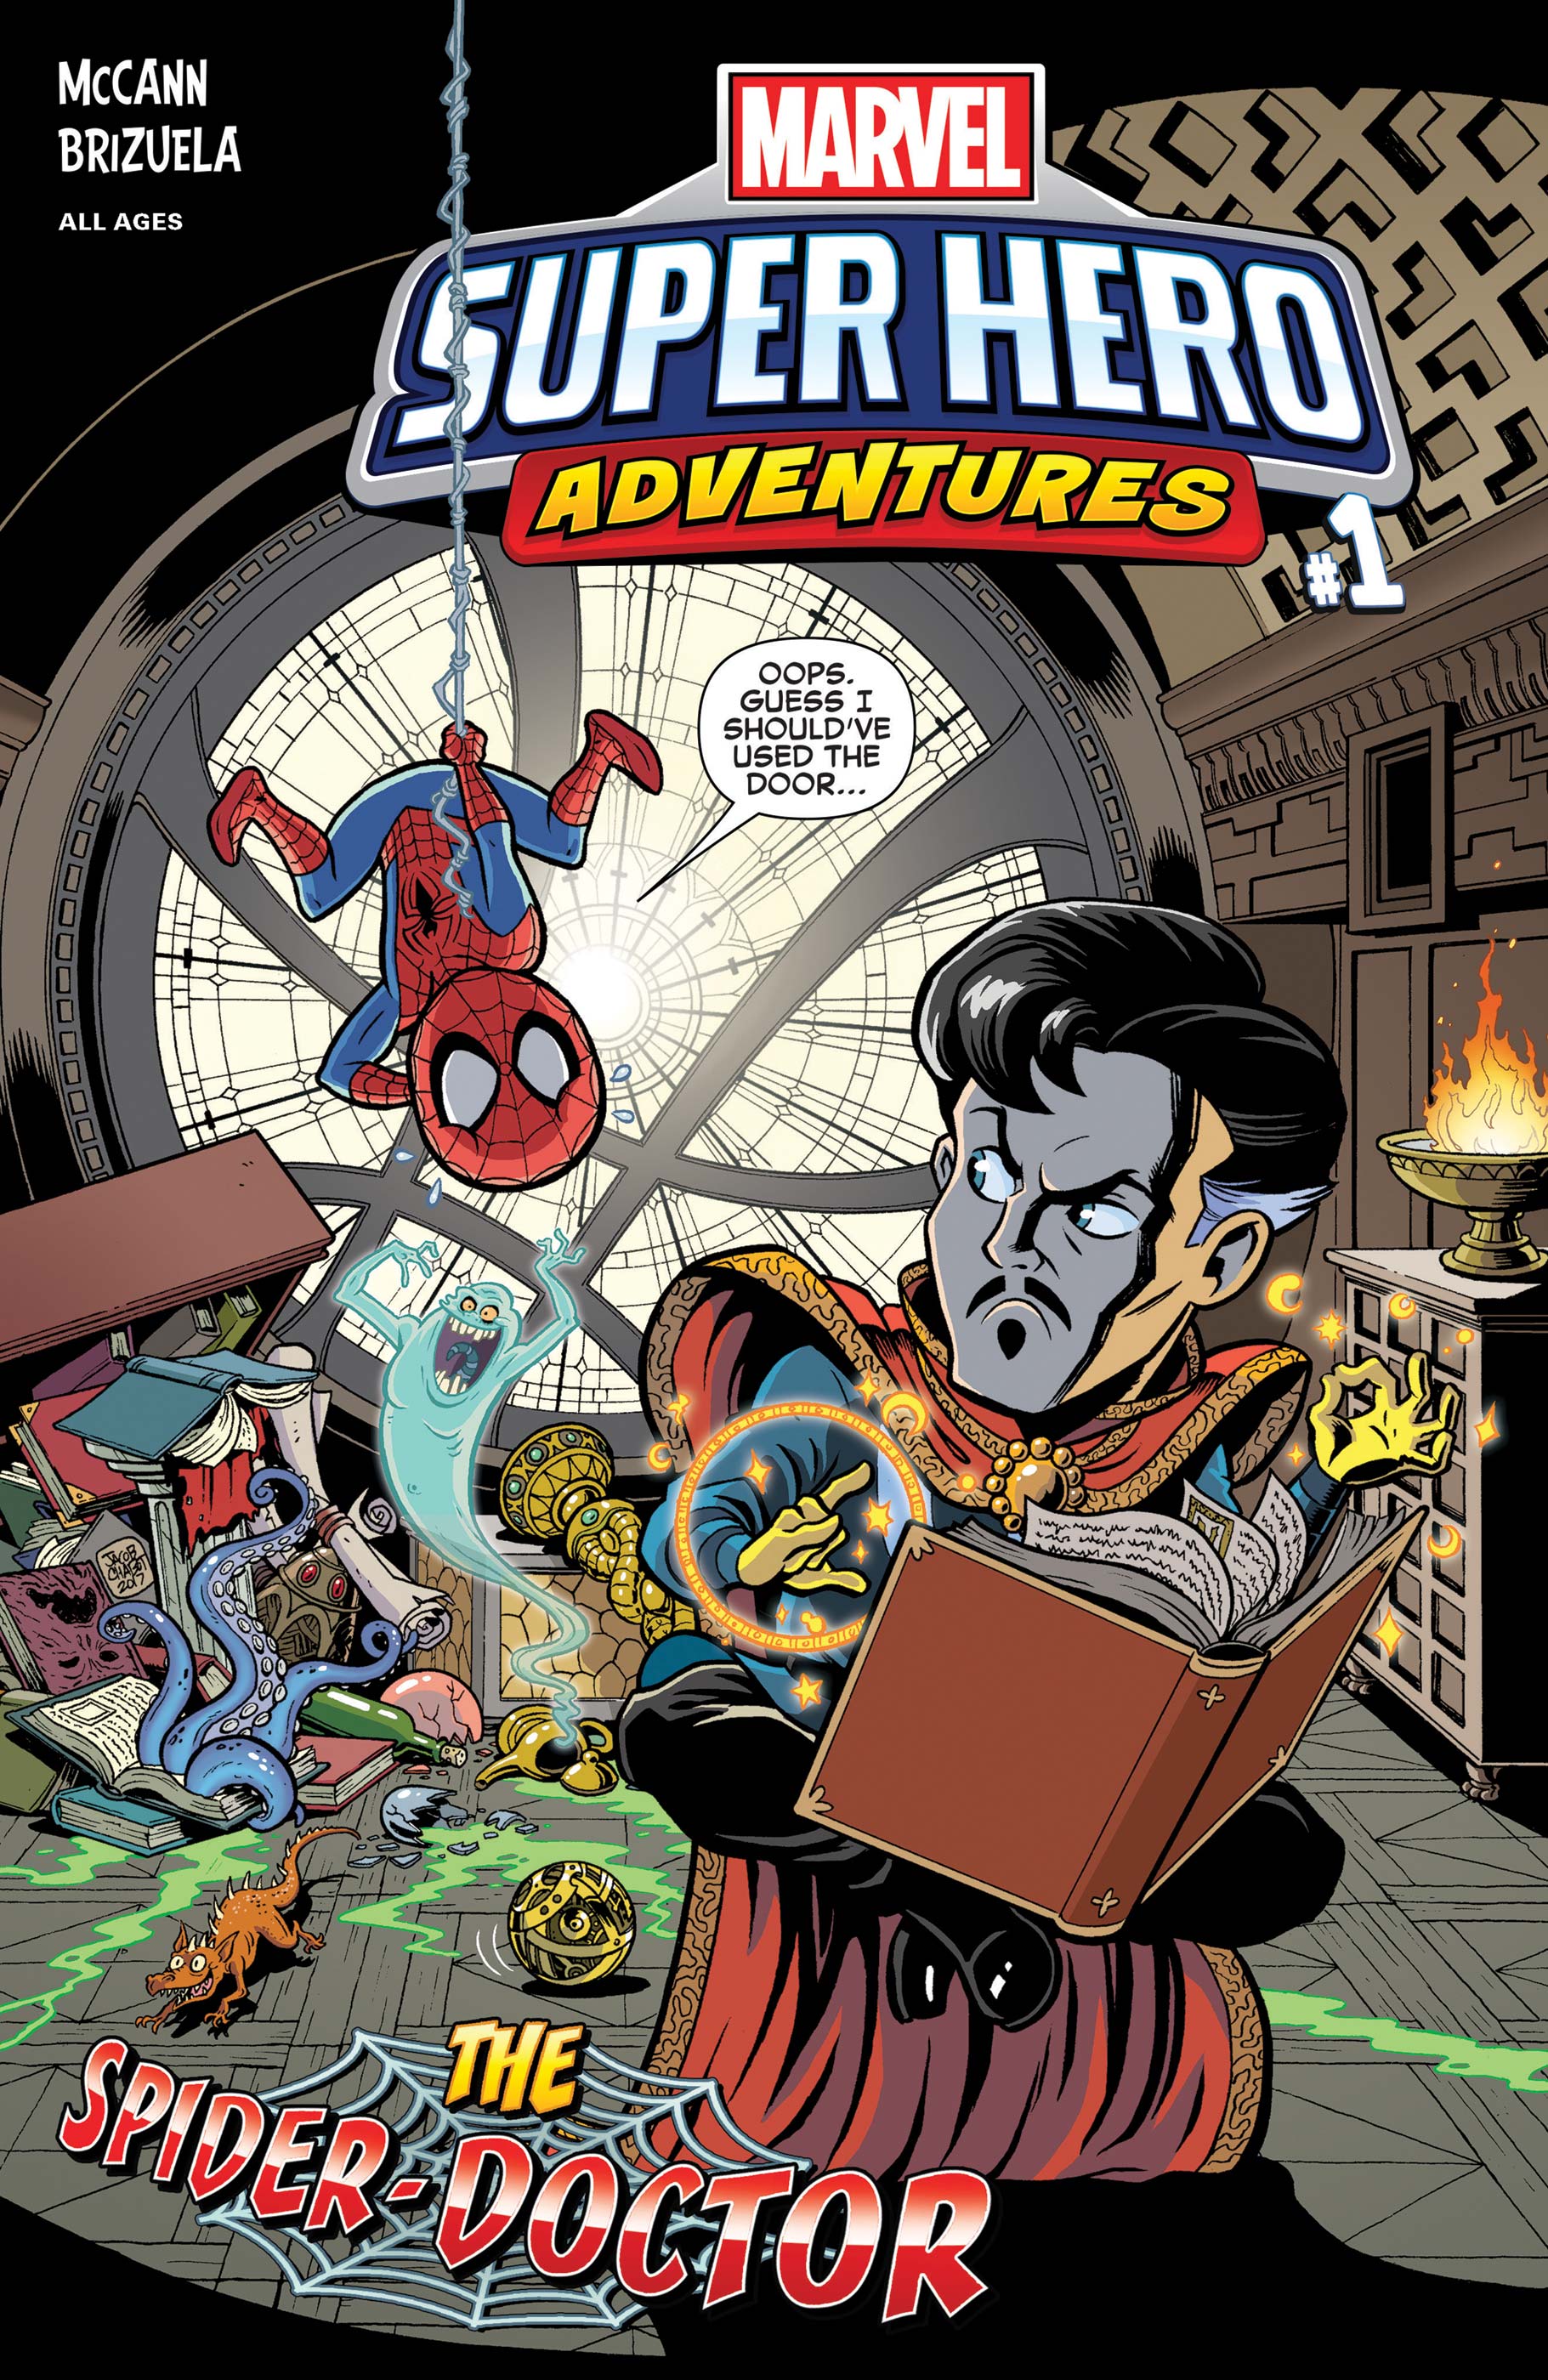 Marvel Super Hero Adventures: The Spider-Doctor (2018) #1